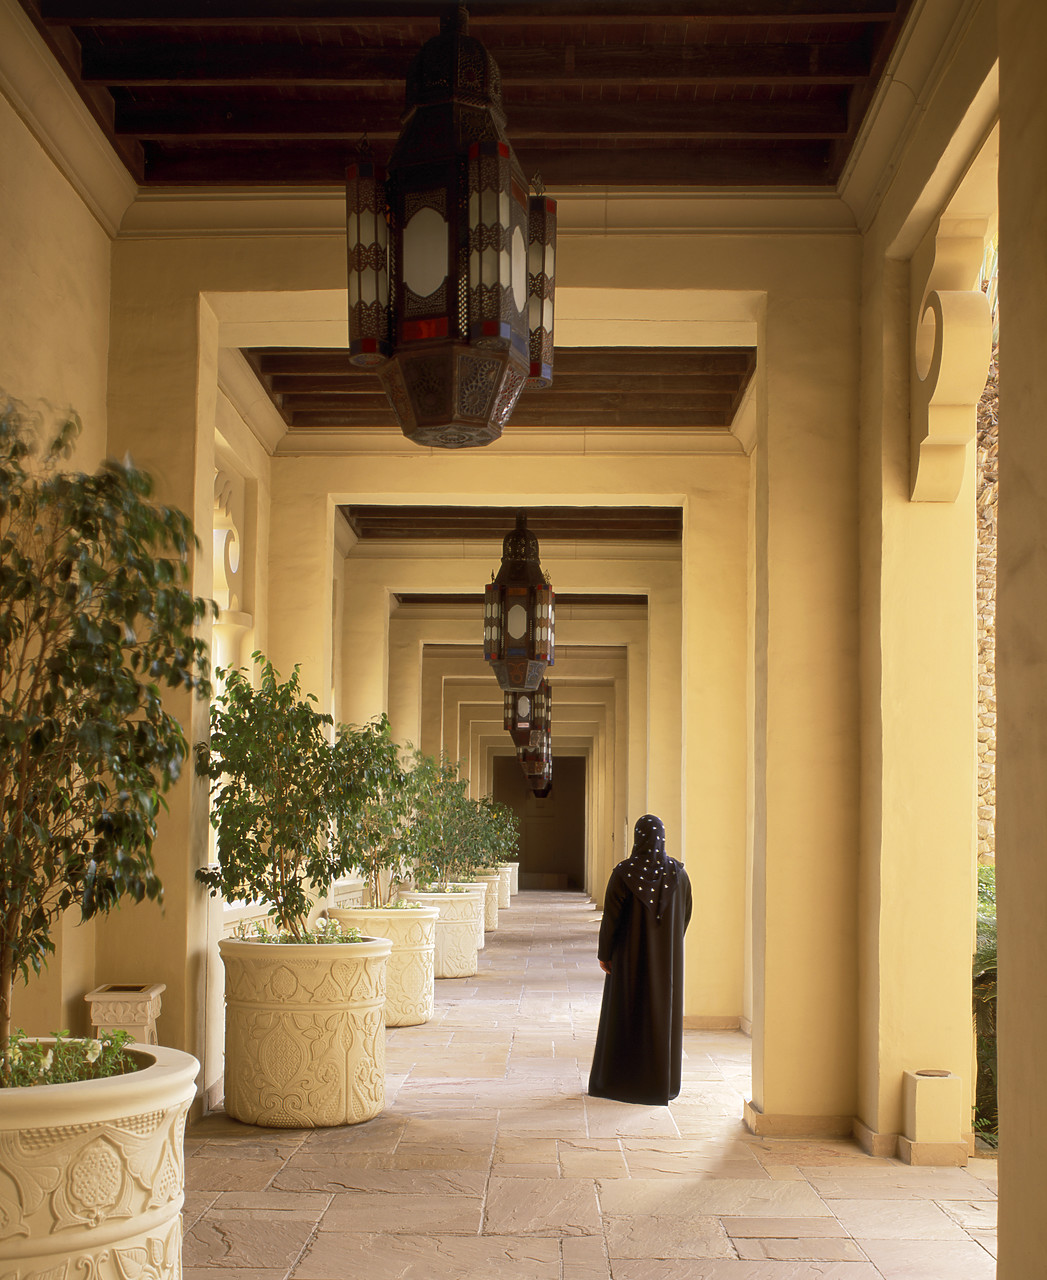 #050037-1 - Local Arab Woman in Corridor, Royal Mirage Hotel, Dubai, UAE